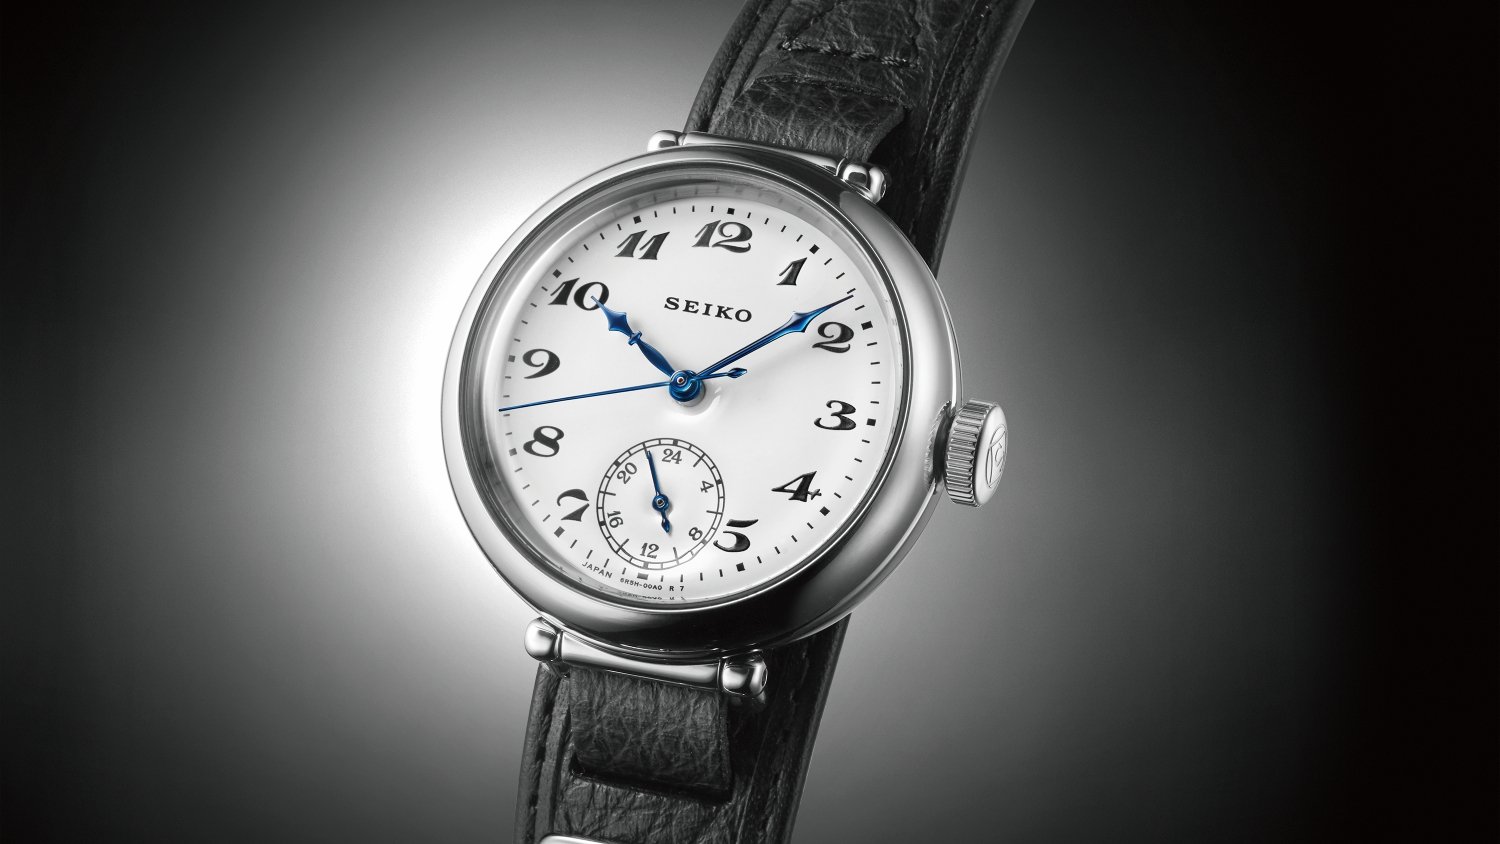 SEIKOブランド100周年記念。SEIKOの名を初めて冠した腕時計に